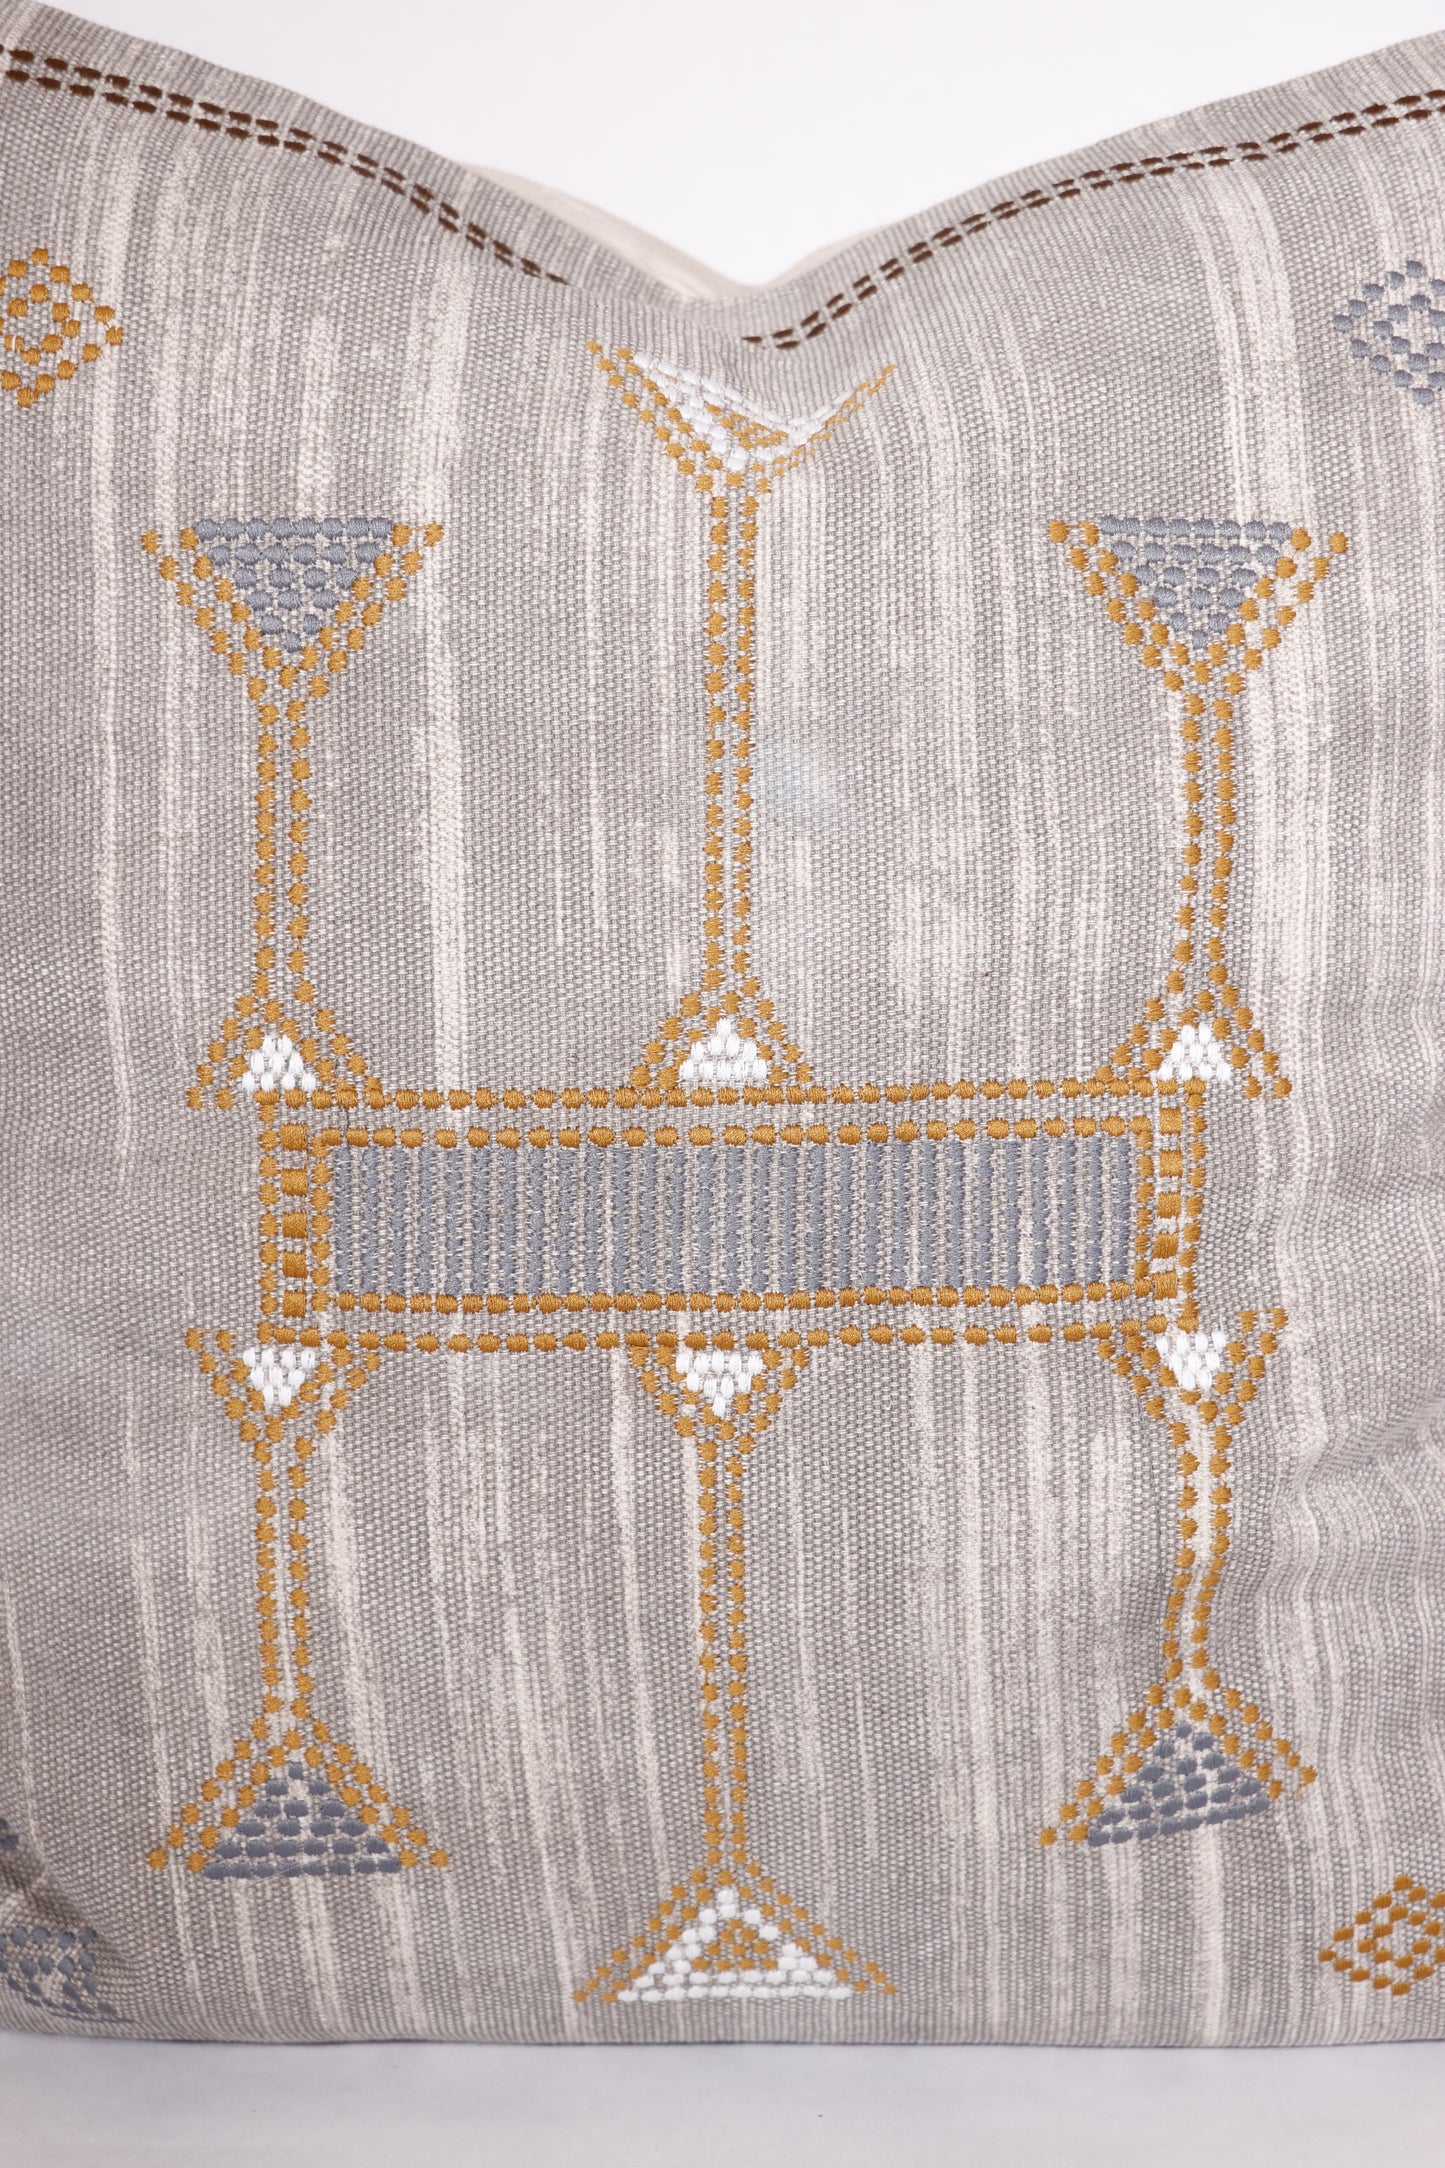 Cactus Silk Inspired Pillow Cover, Grey, 20x20